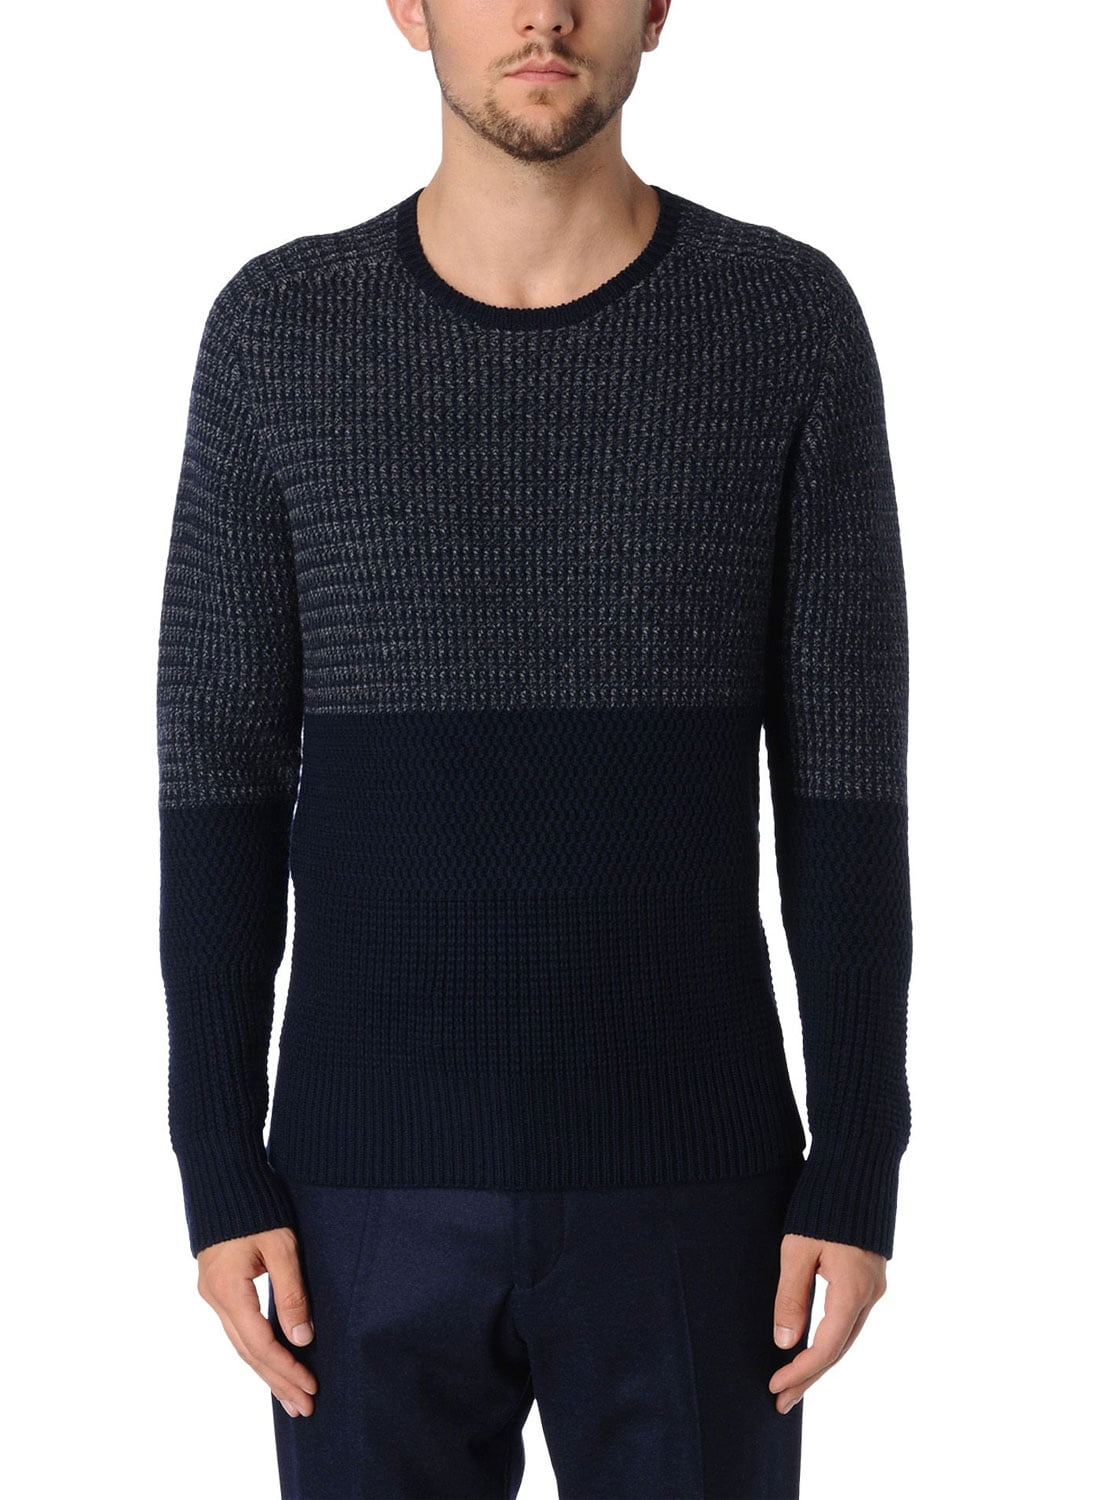 Hardy Amies - Hardy Amies Mens Wool Crewneck Knit Sweater X-Large XL ...